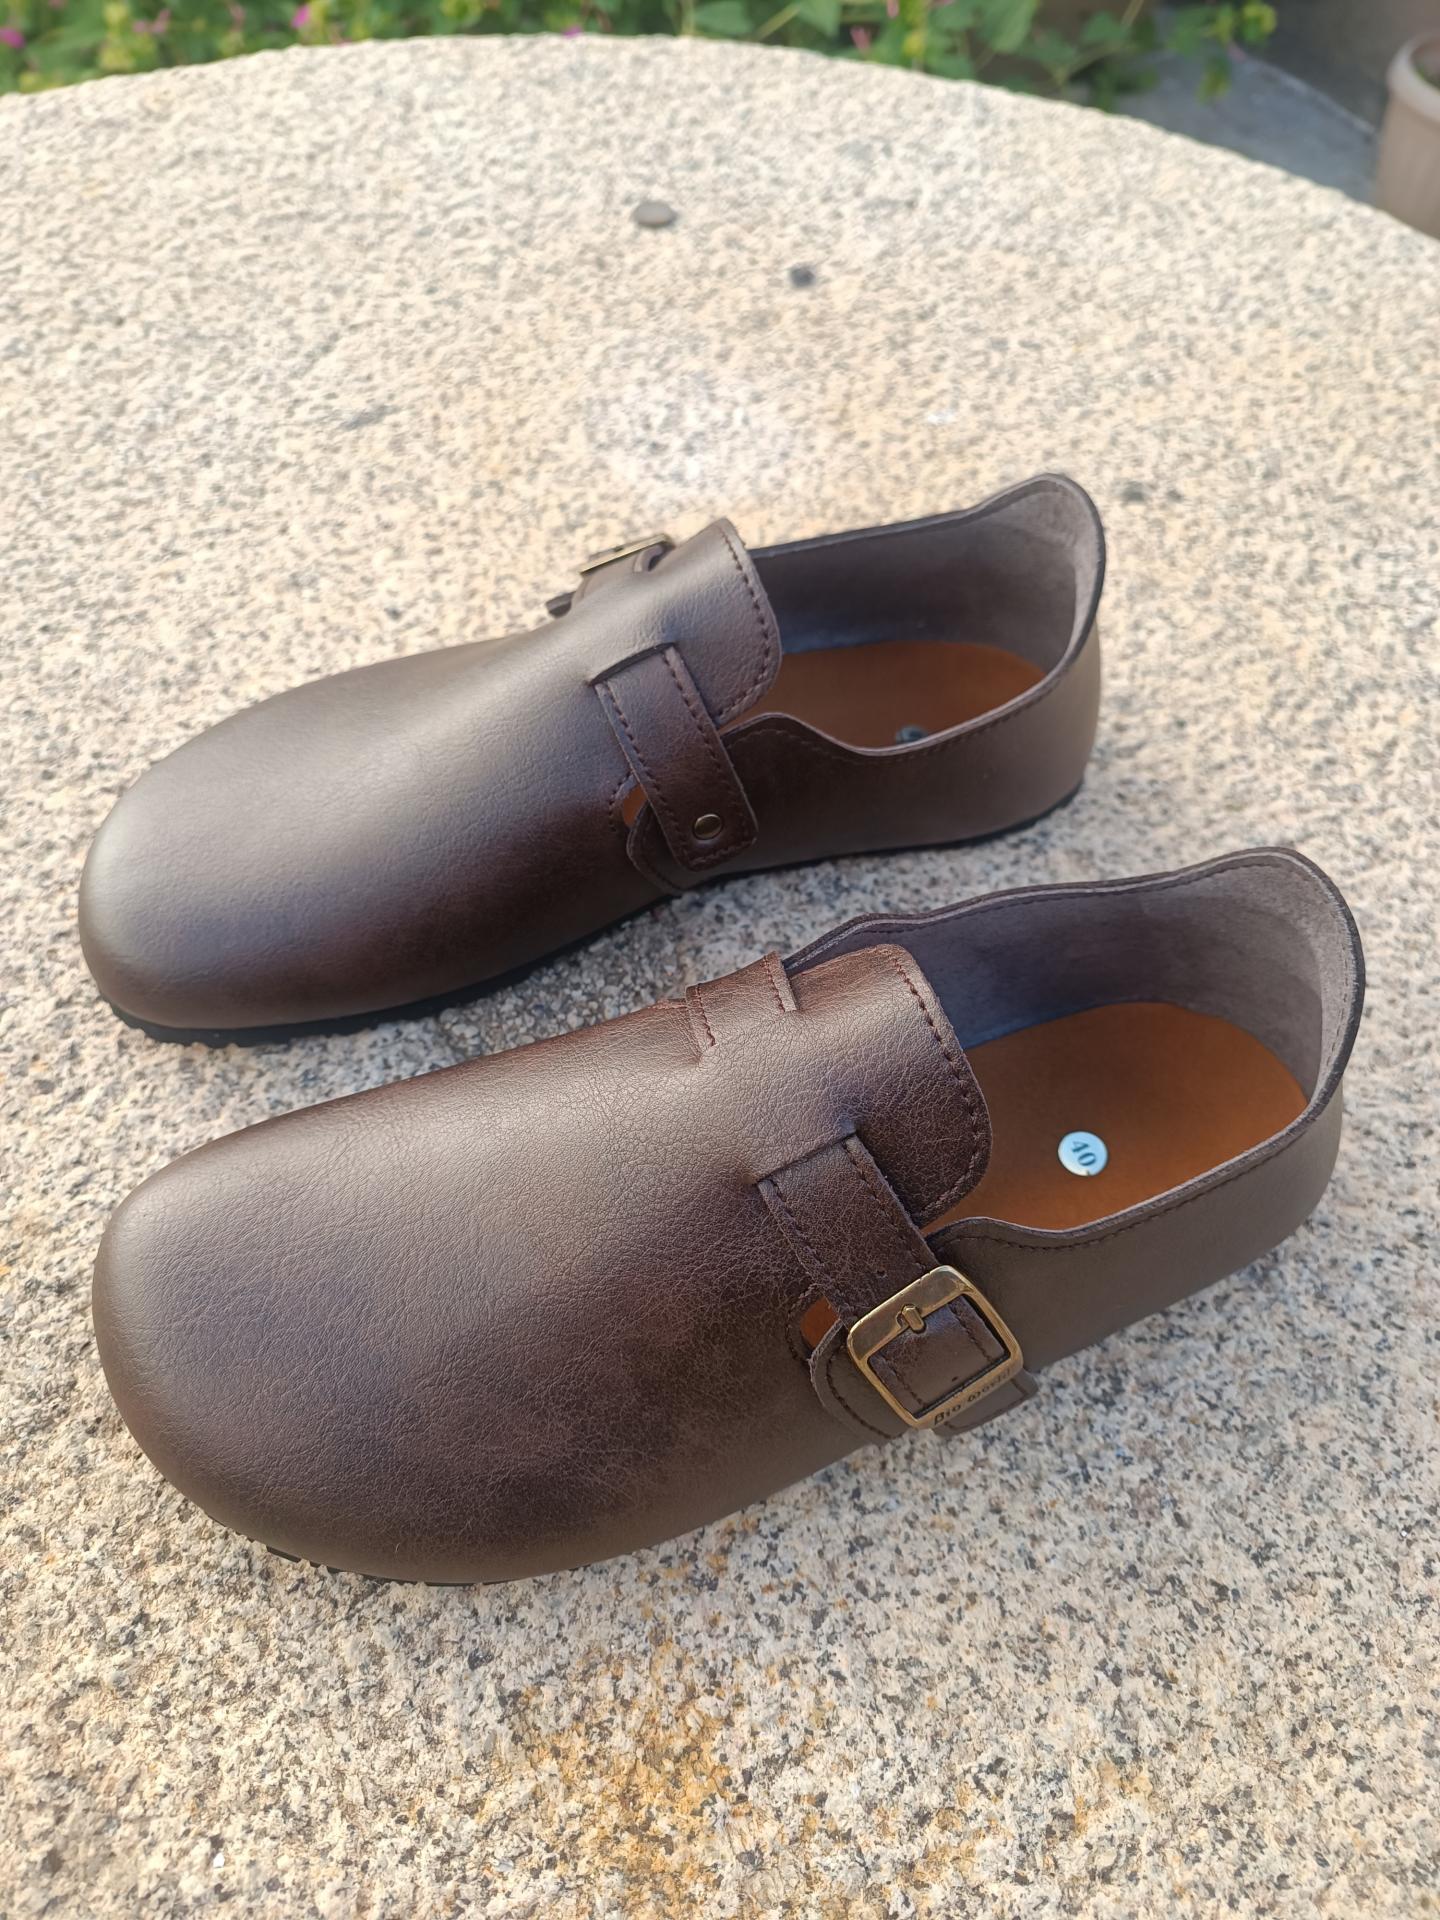 Calzado Barefoot Mujer – Zapatos Respetuosos